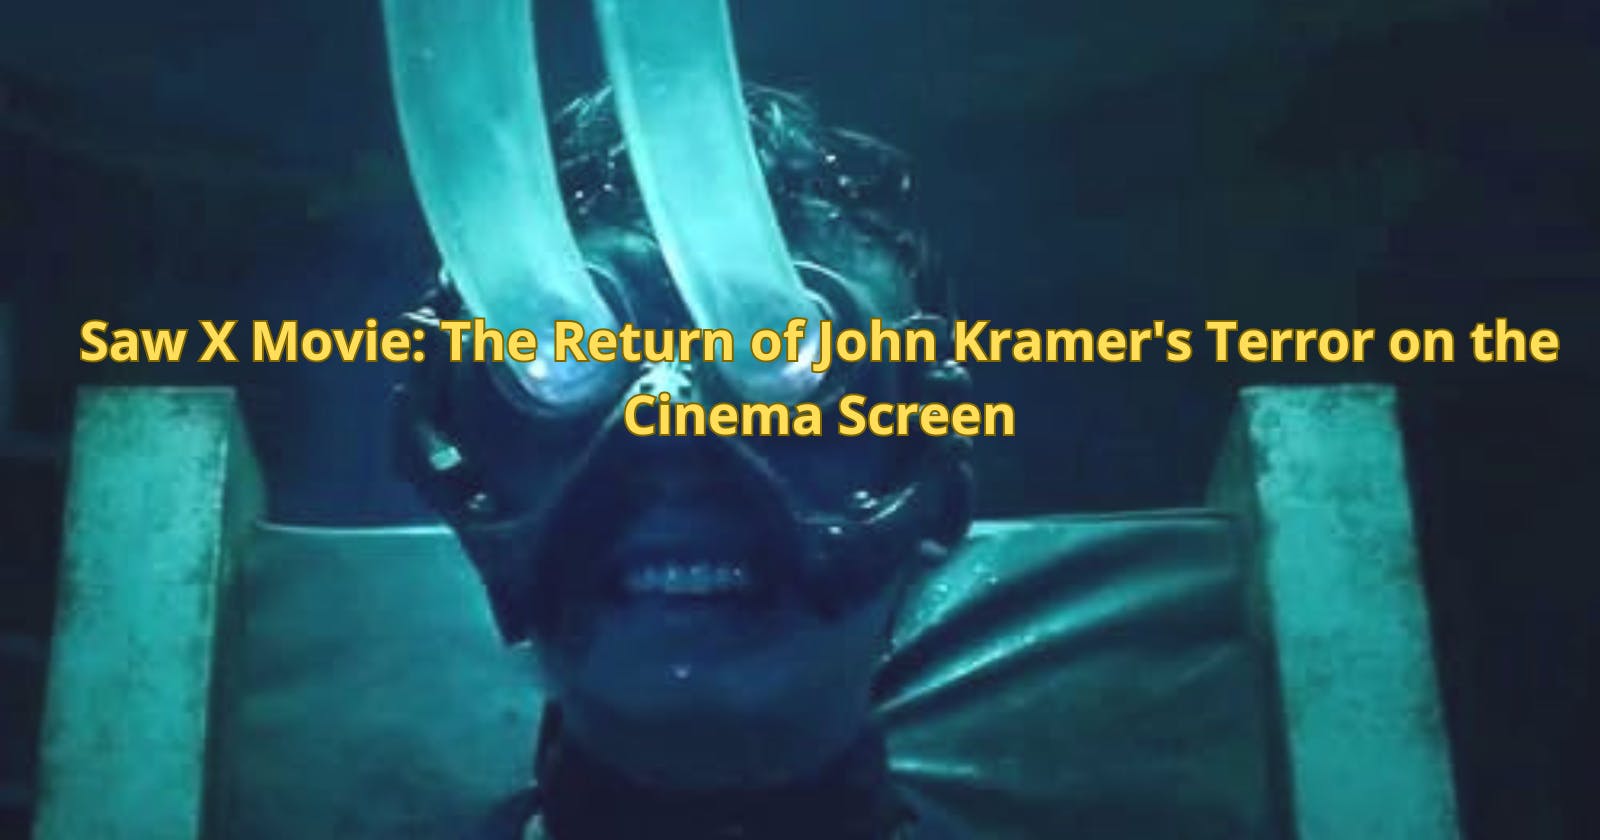 Saw X Movie: The Return of John Kramer's Terror on the Cinema Screen